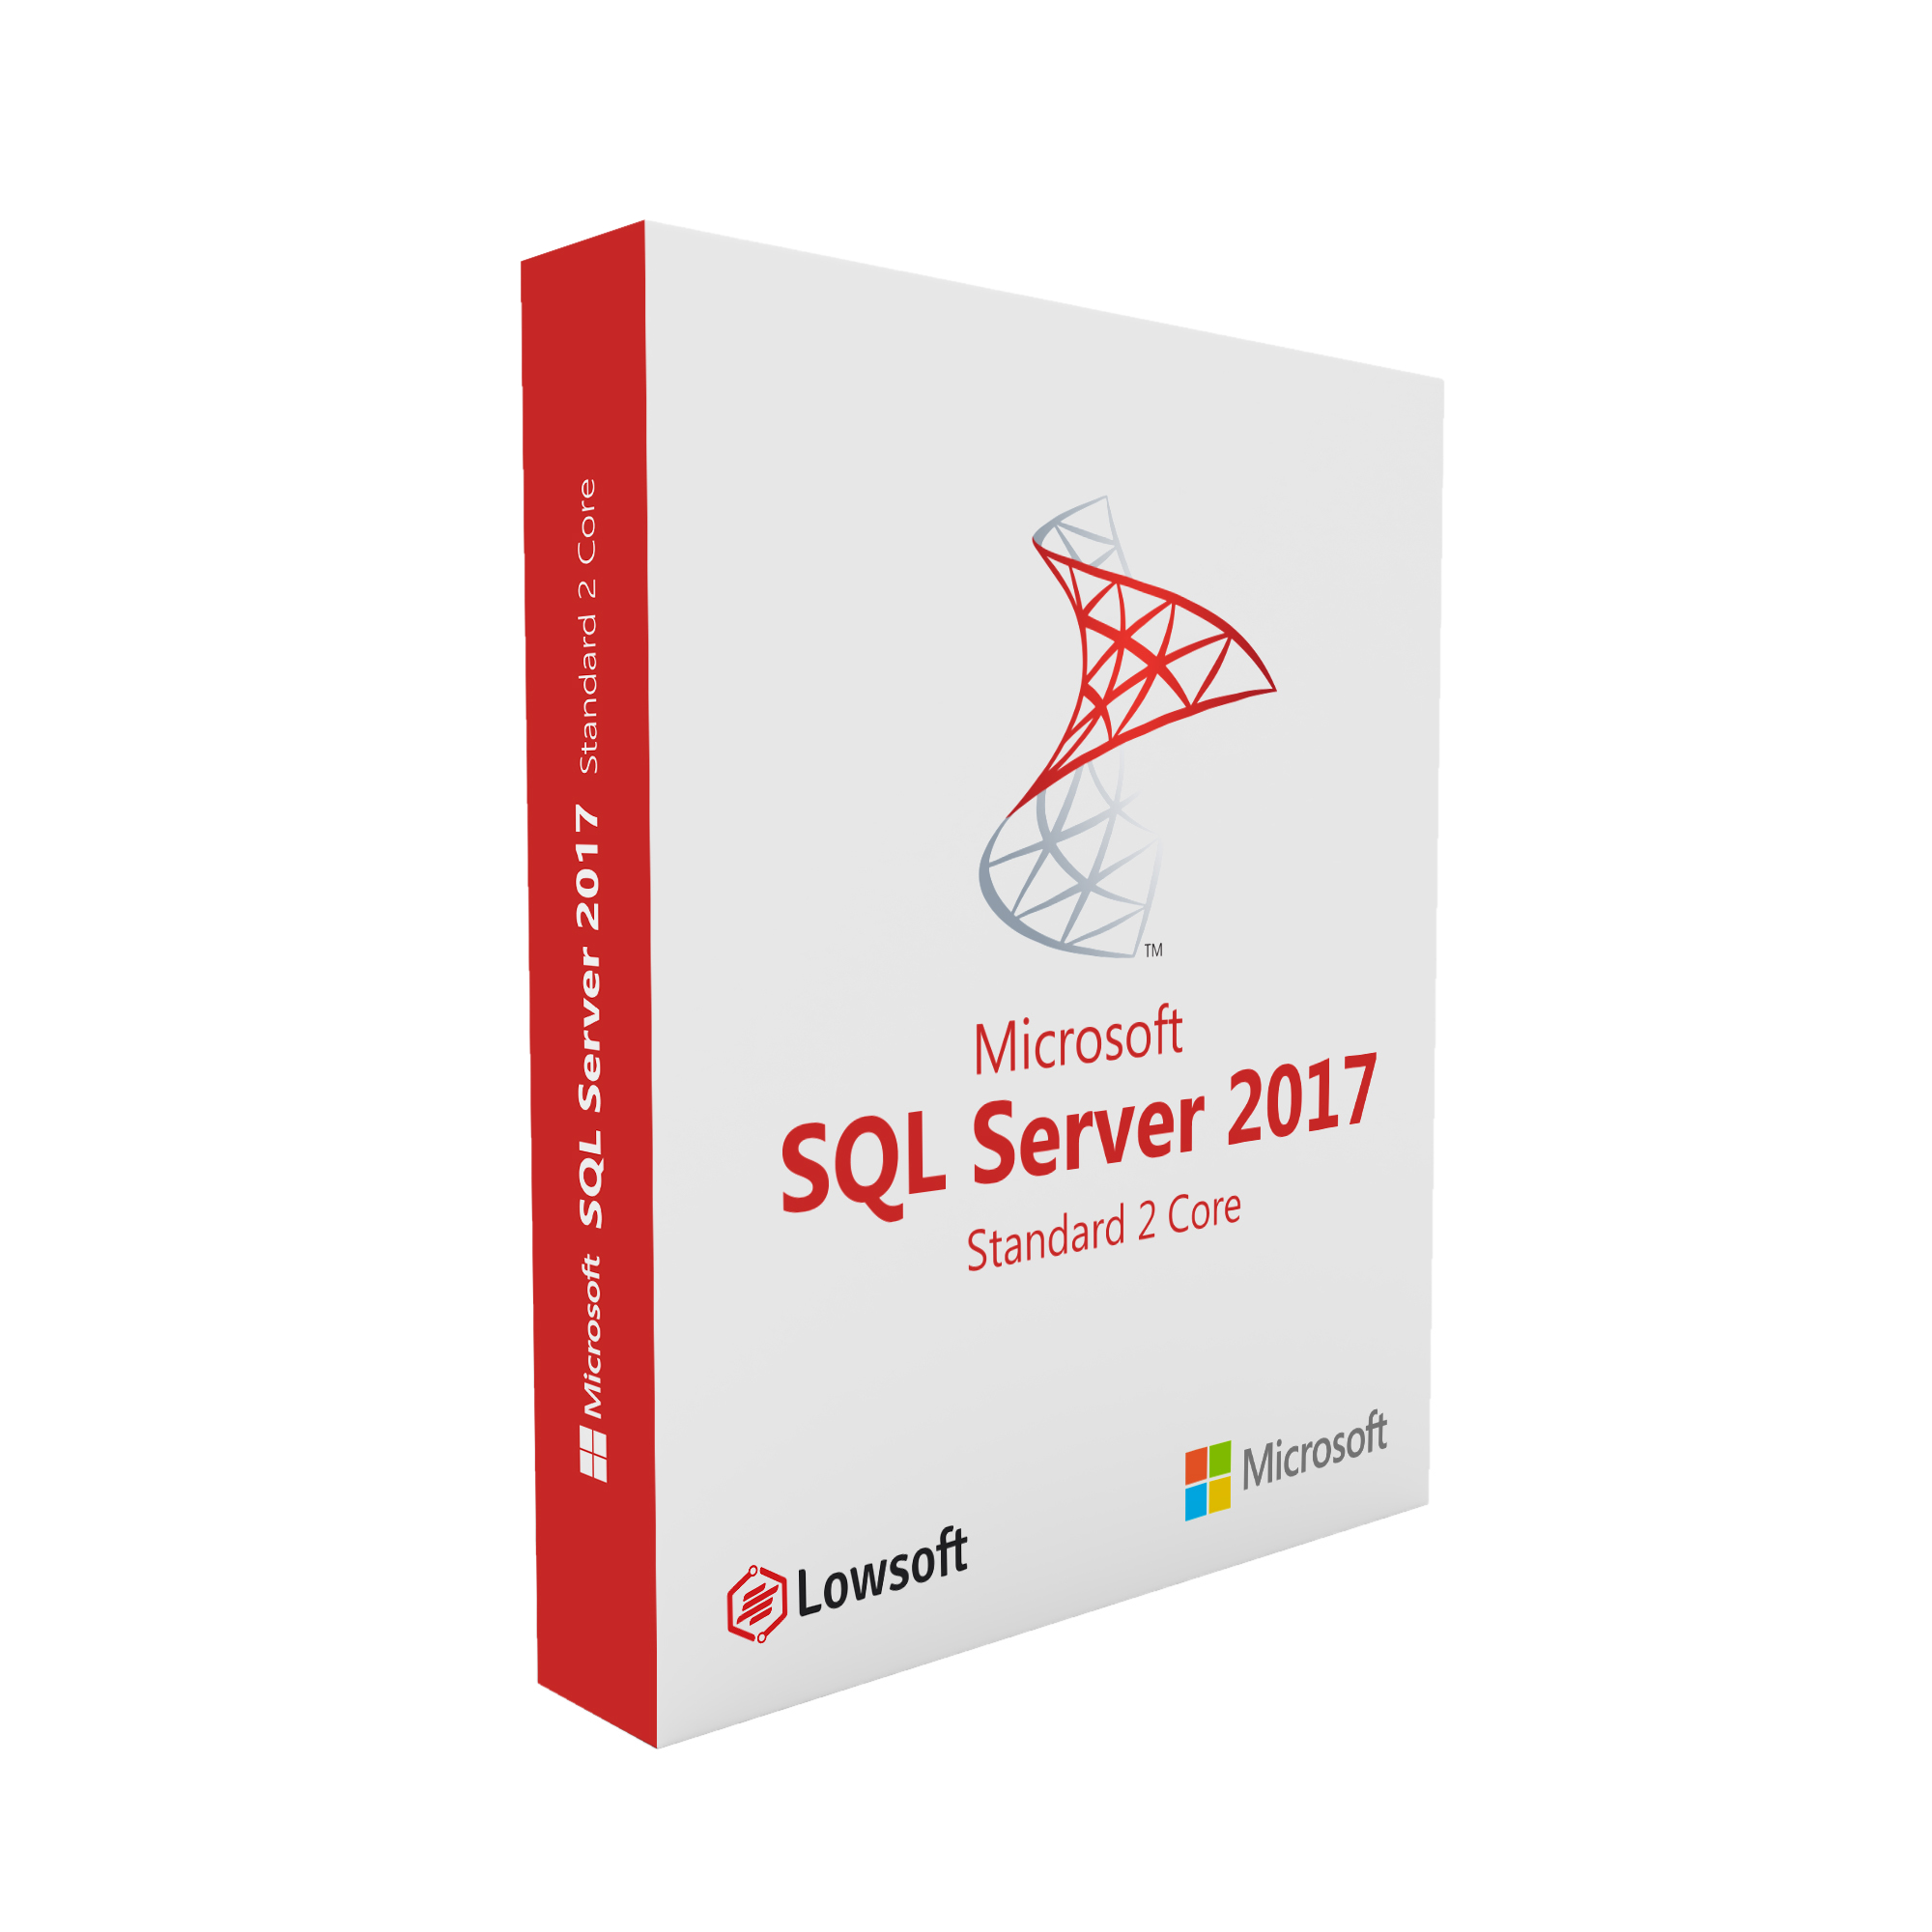 SQL Server 2017 Standard (2 Core)